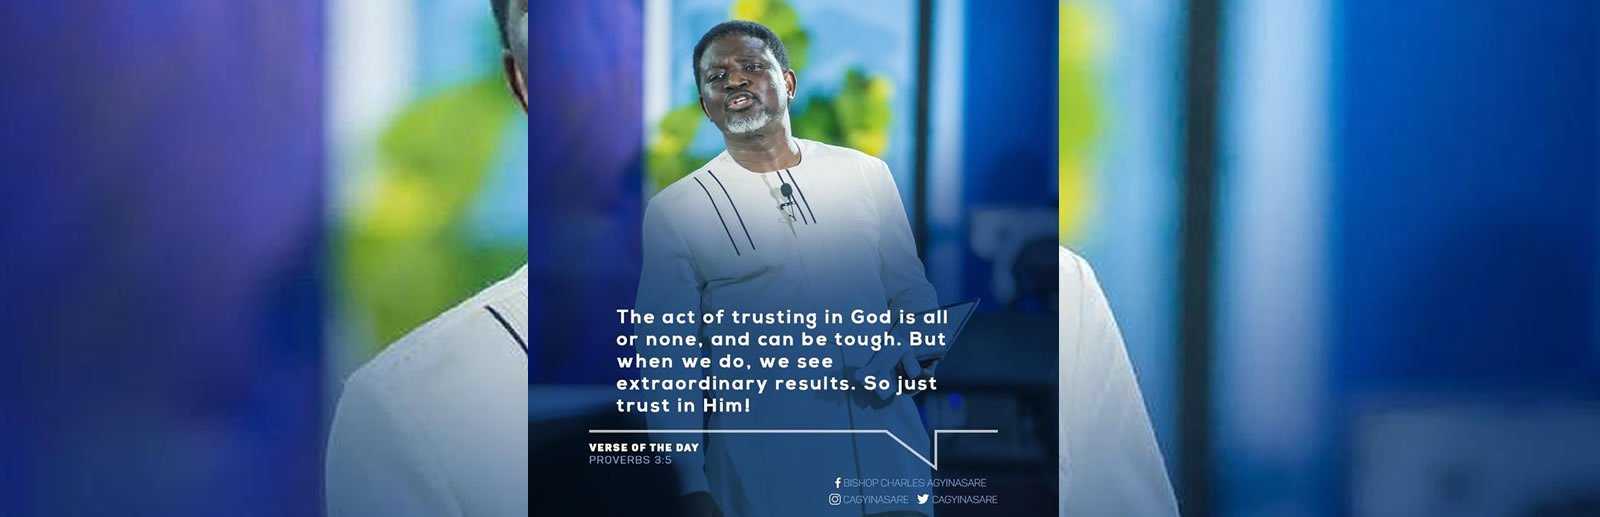 Trust God - Charles Agyinasare